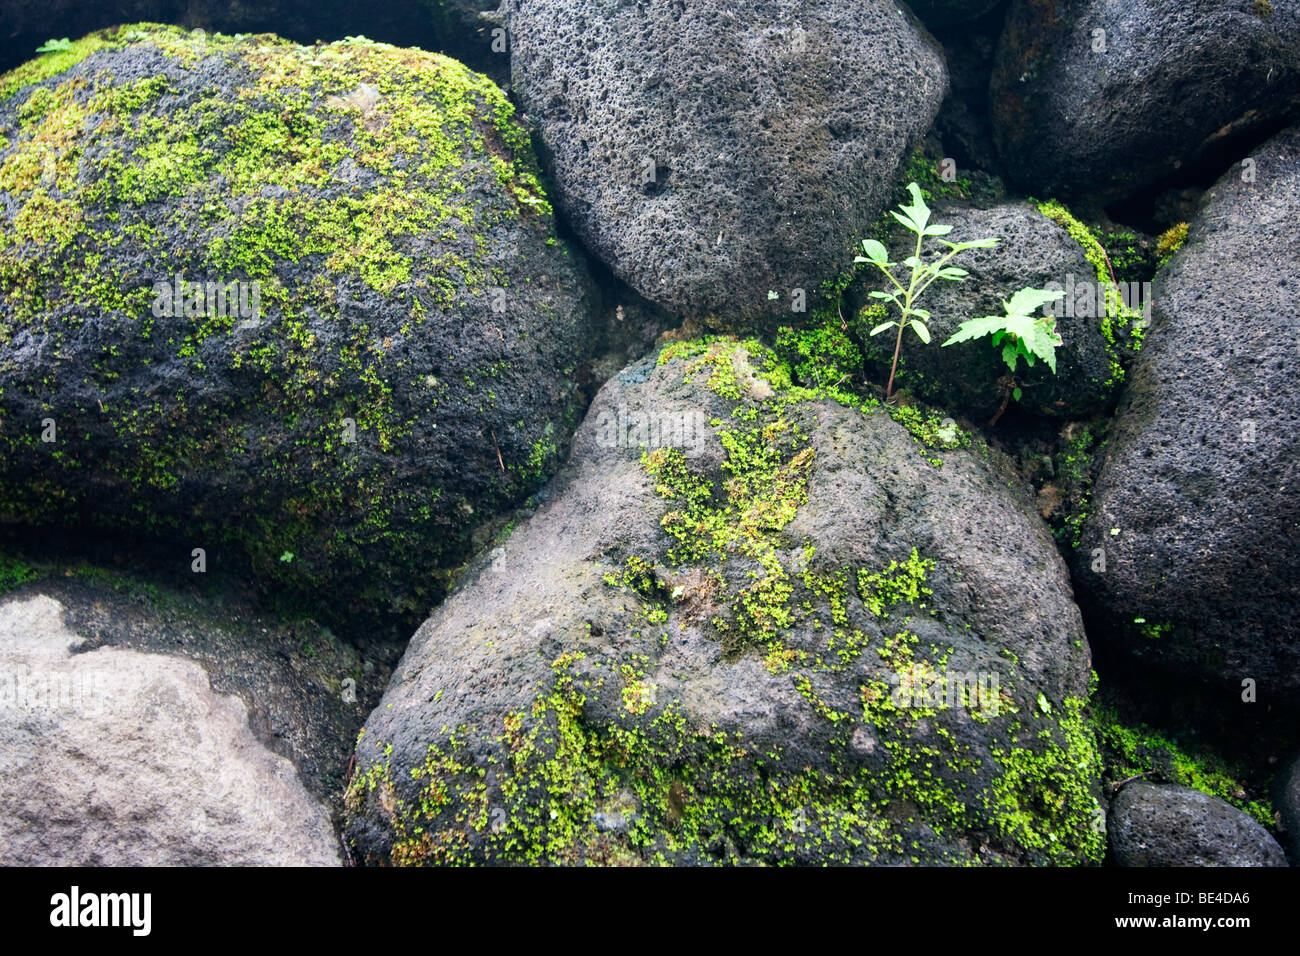 Vegetation growing on rocks. Stock Photo